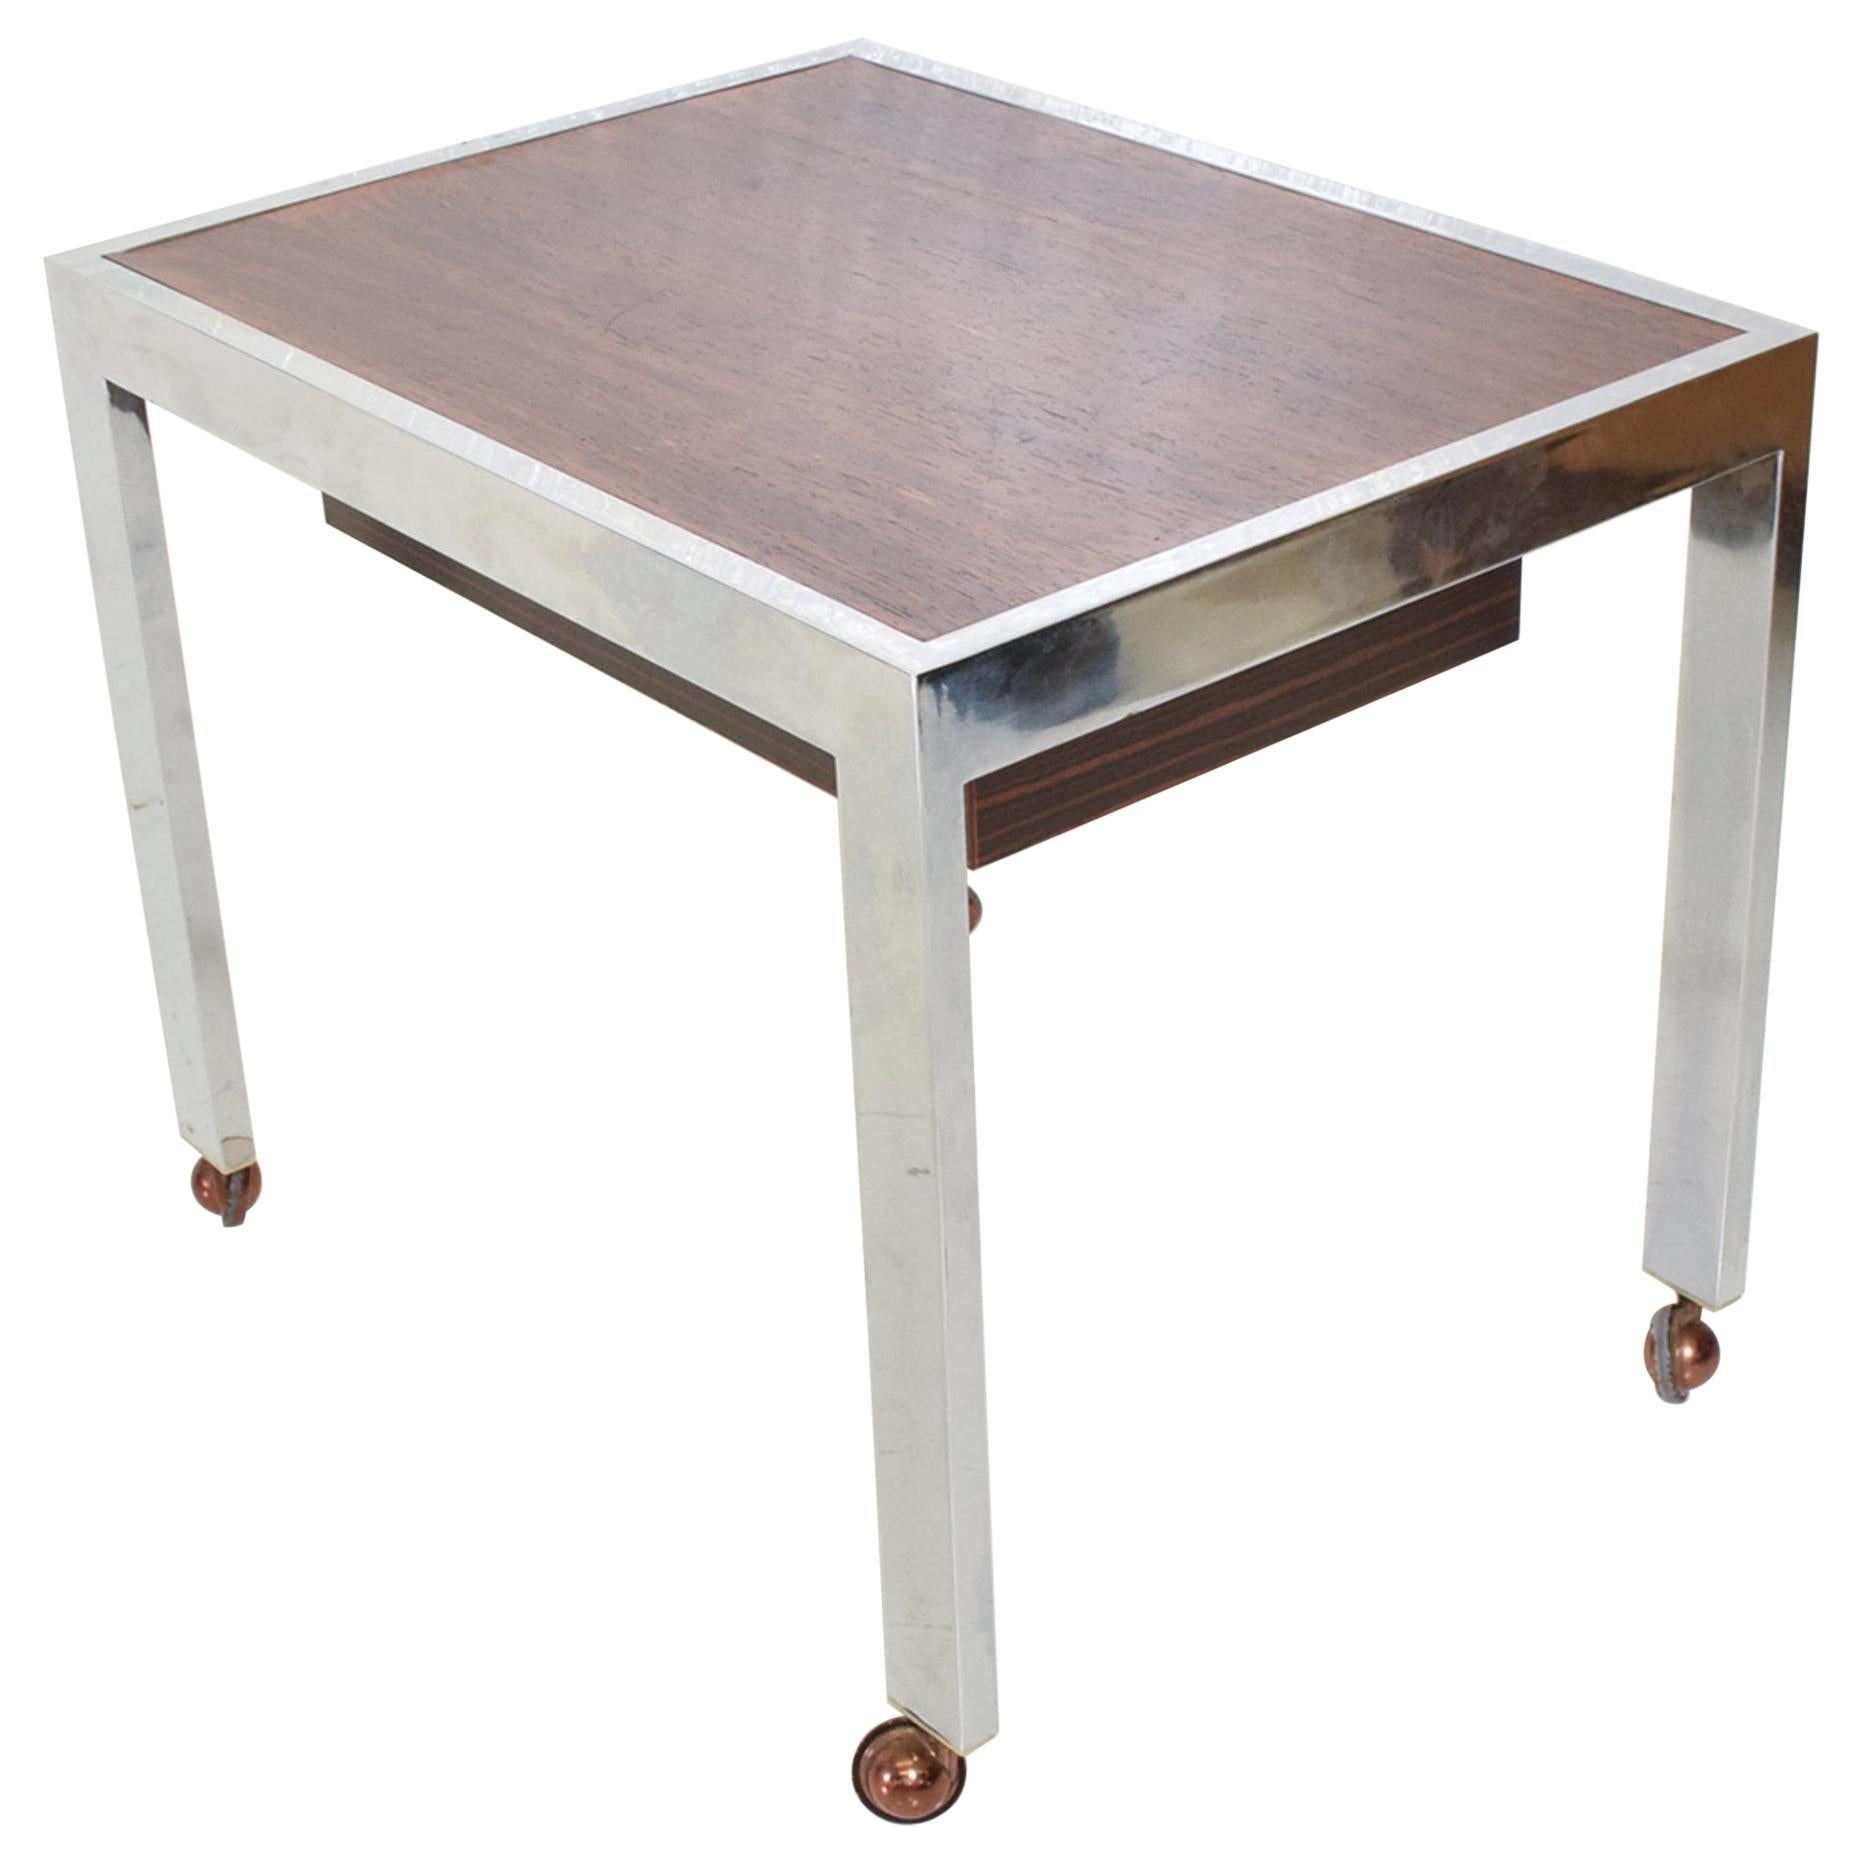 Sleek Rosewood & Chrome Rectangular Side Table on Rolling Casters 1960s Modern